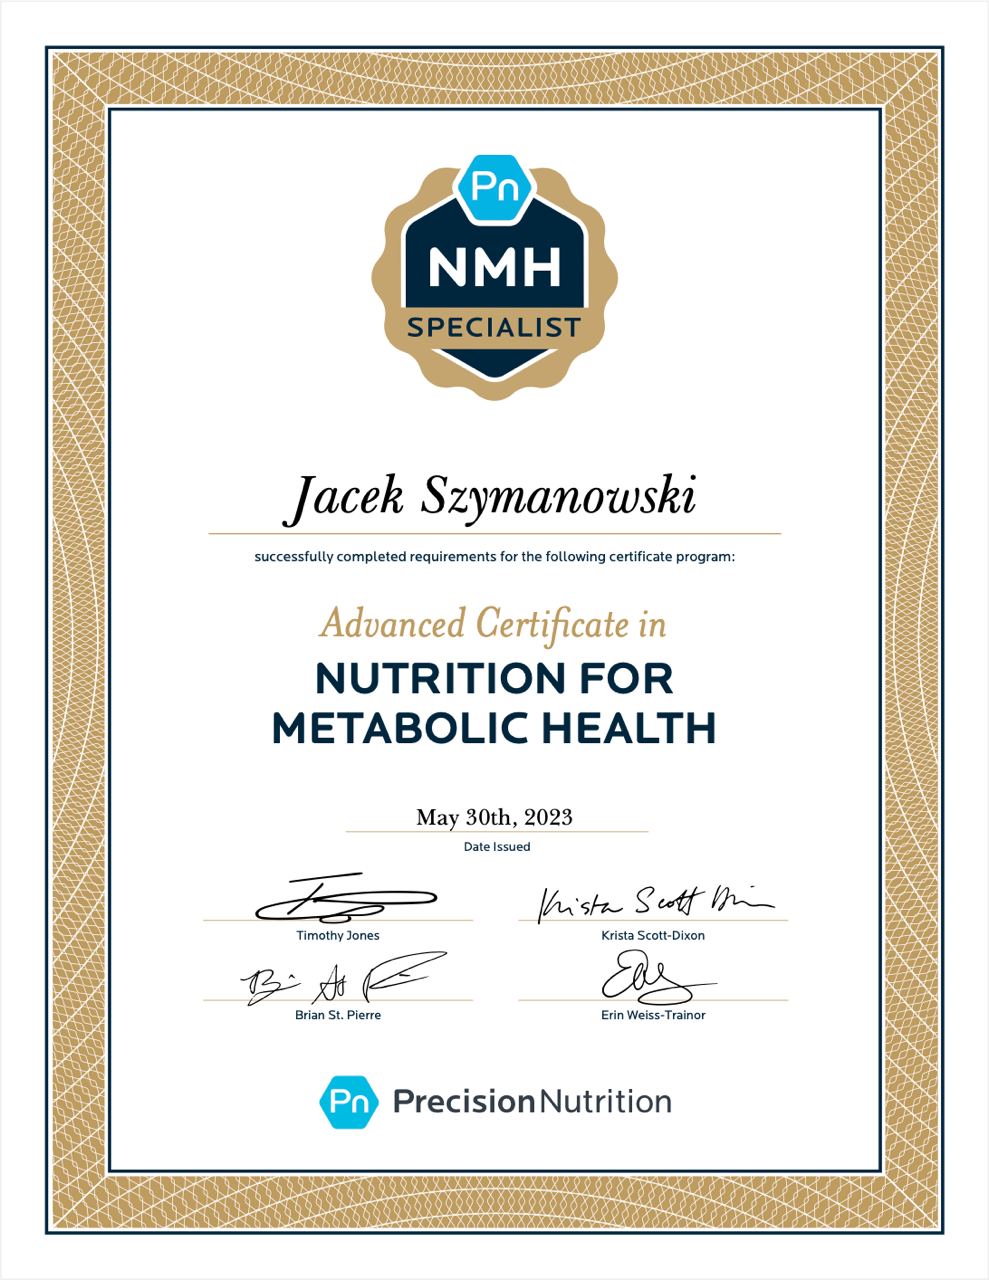 Jacek Szymanowski advanced certificate in nutrition for metabolic health